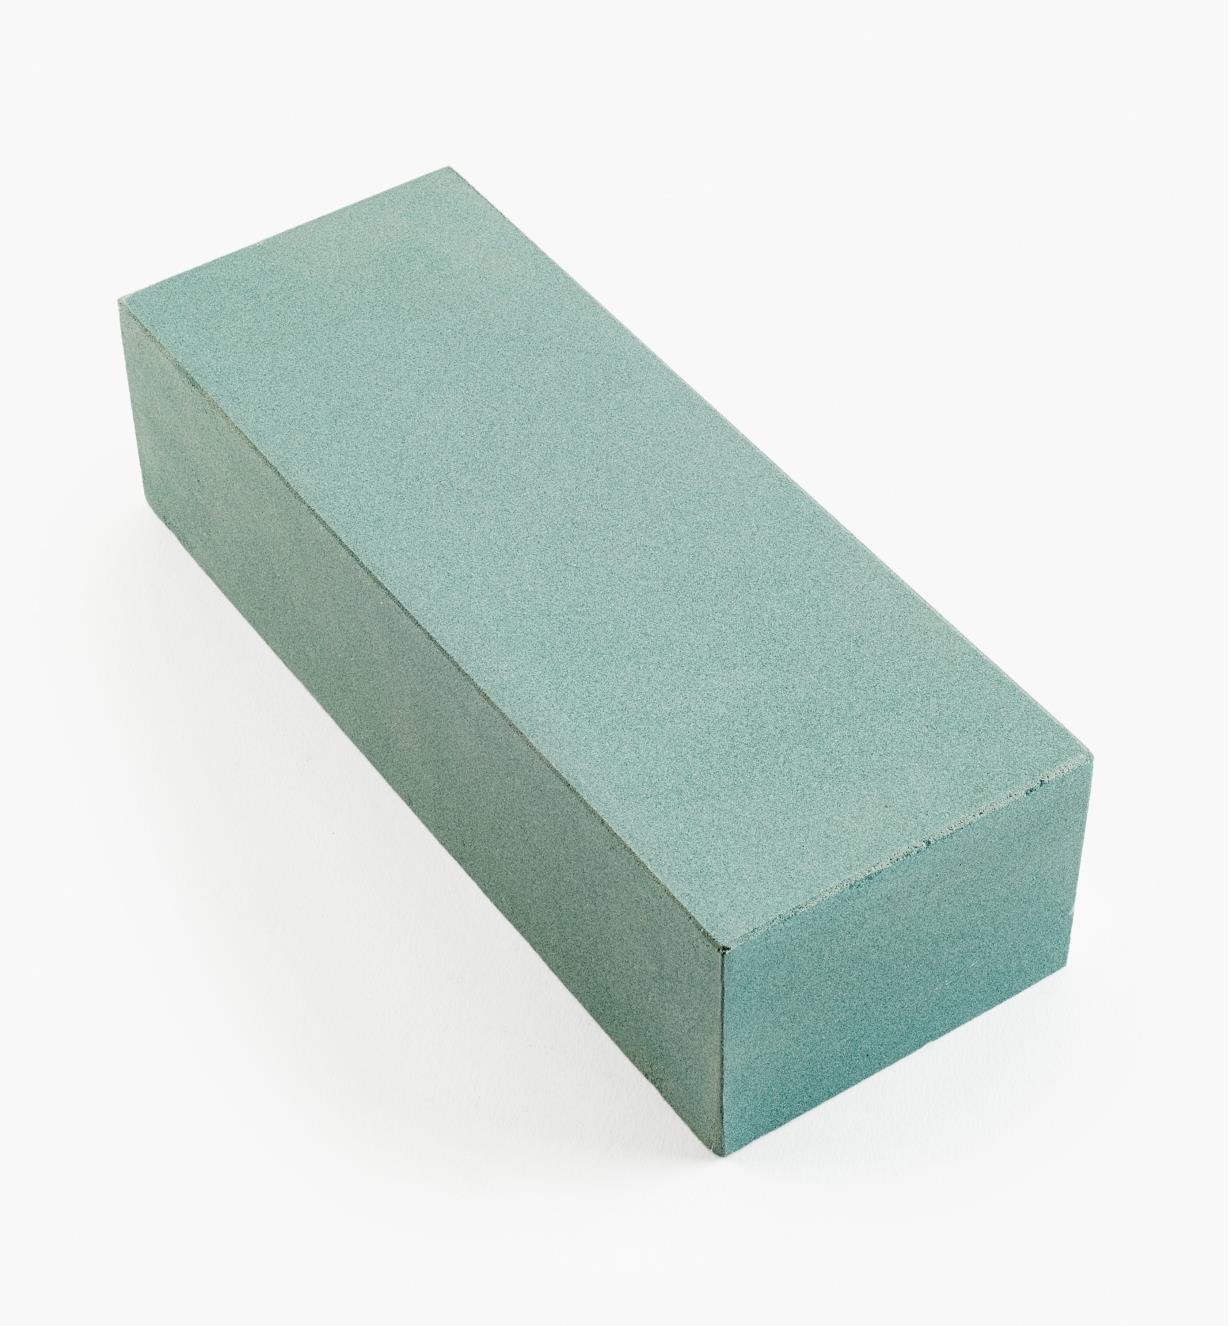 60M6001 - 200x Green  Silicon Carbide Stone